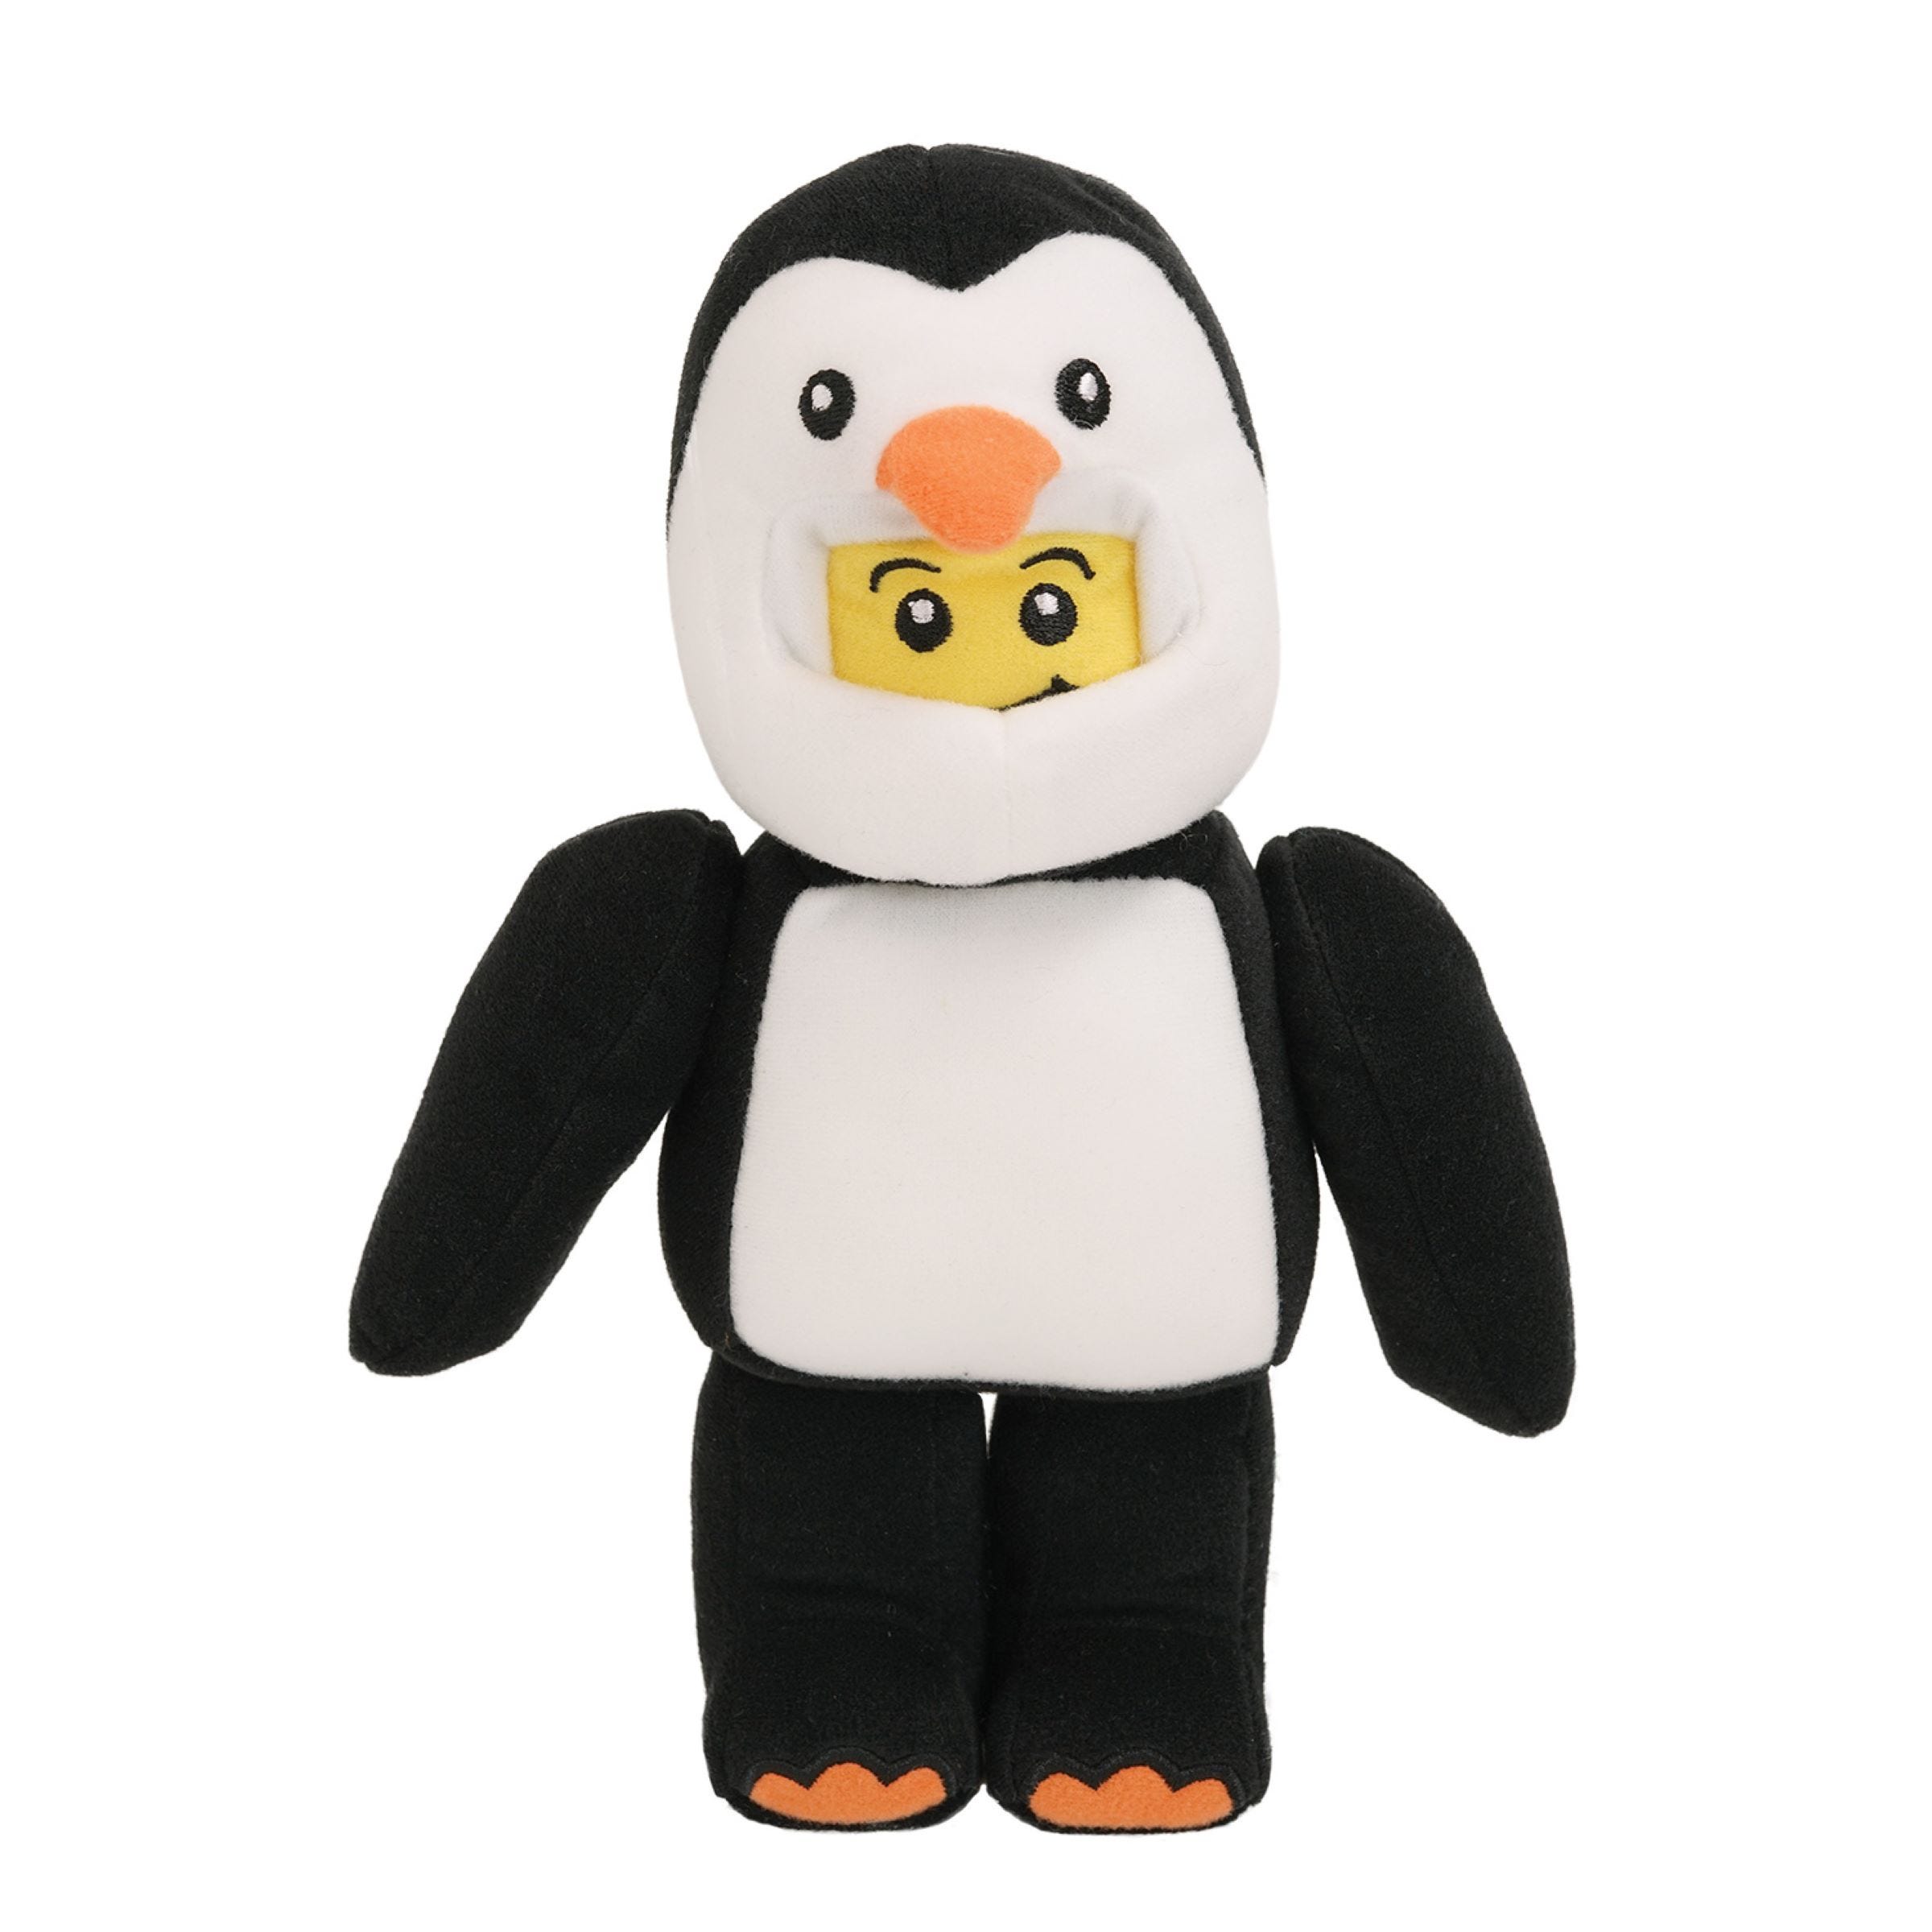 Pingvinpojke plyschfigur